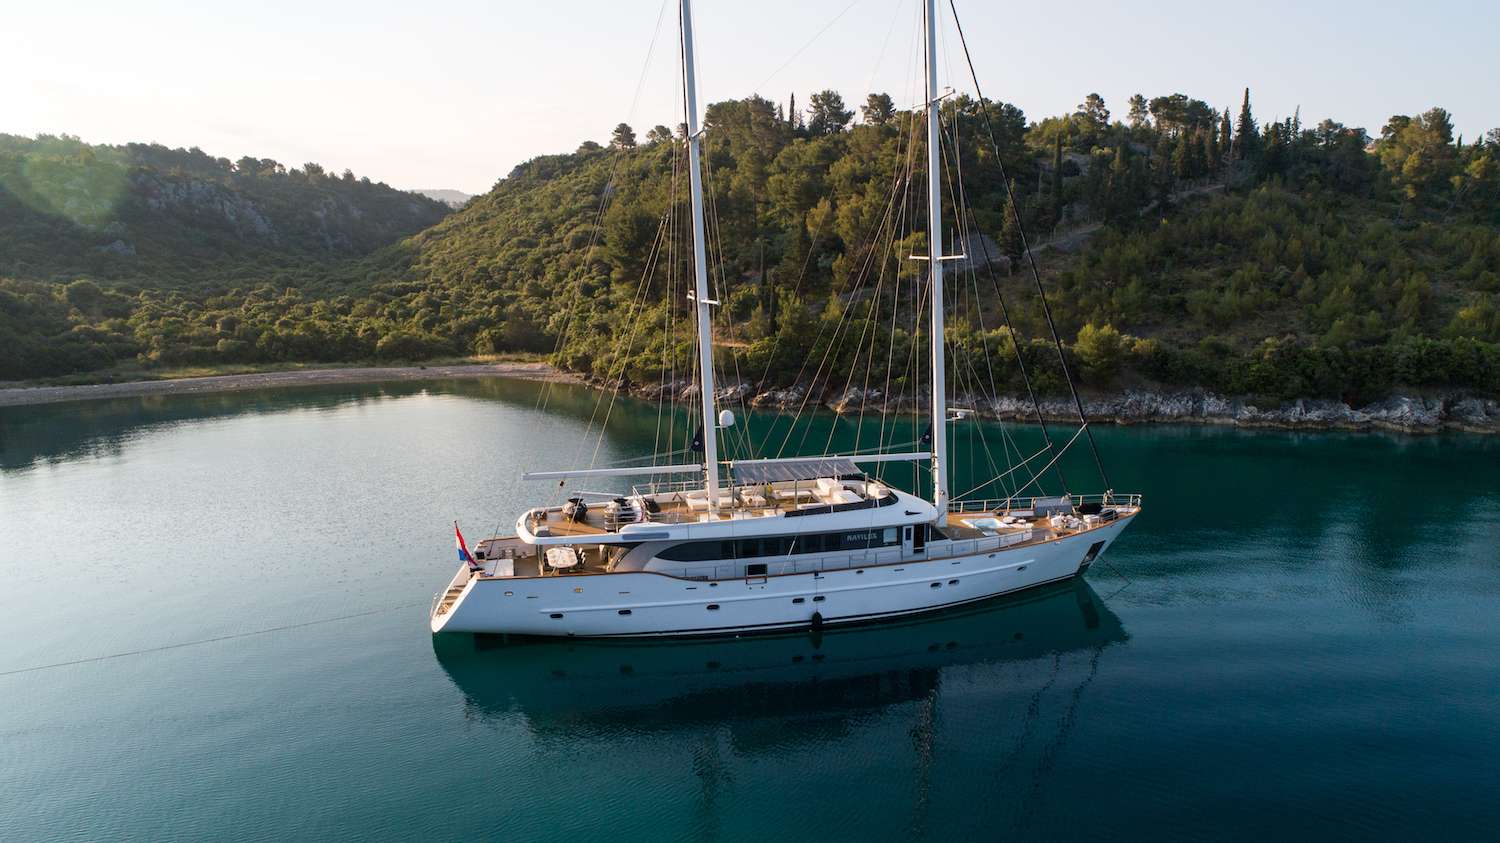 At anchor in Croatia